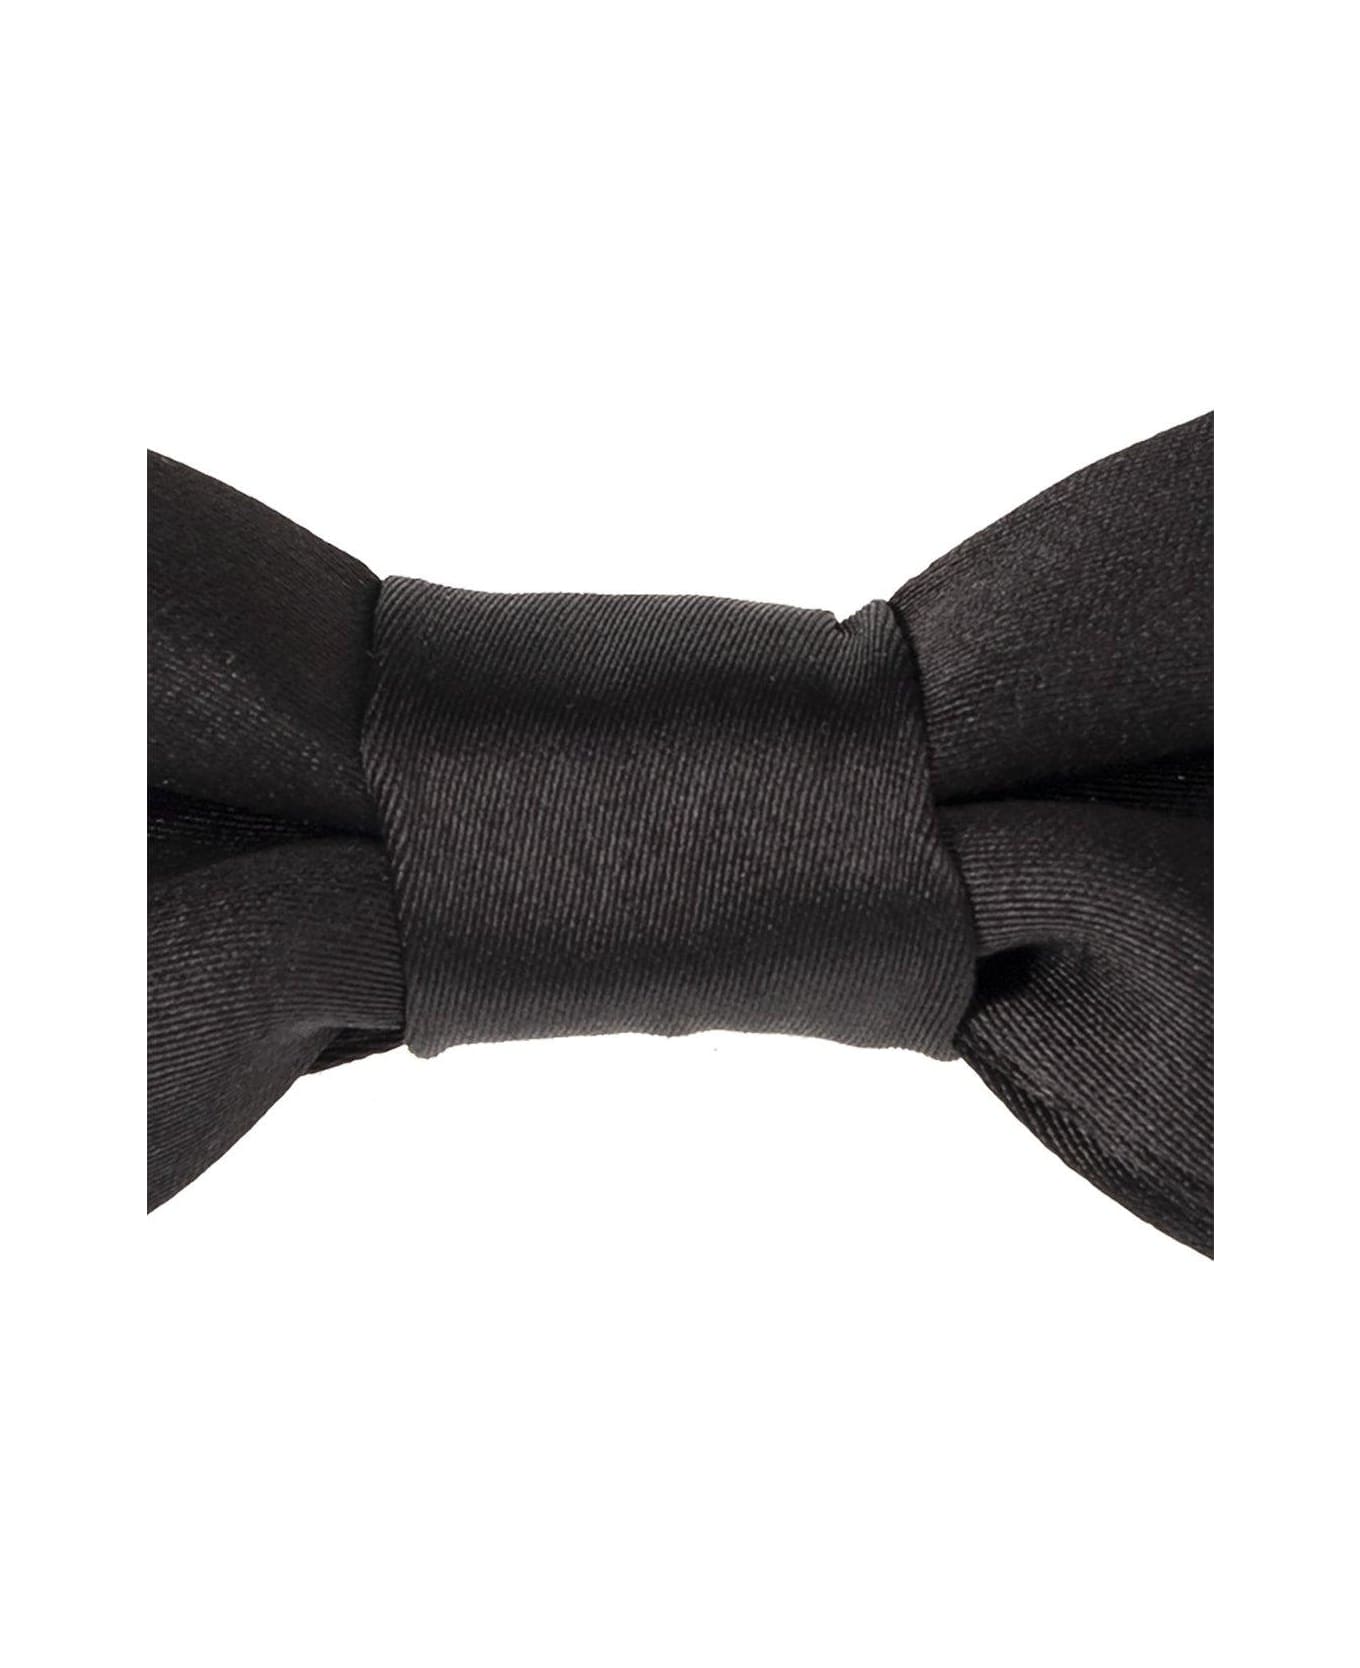 Paul Smith Silk Bow Tie - Black